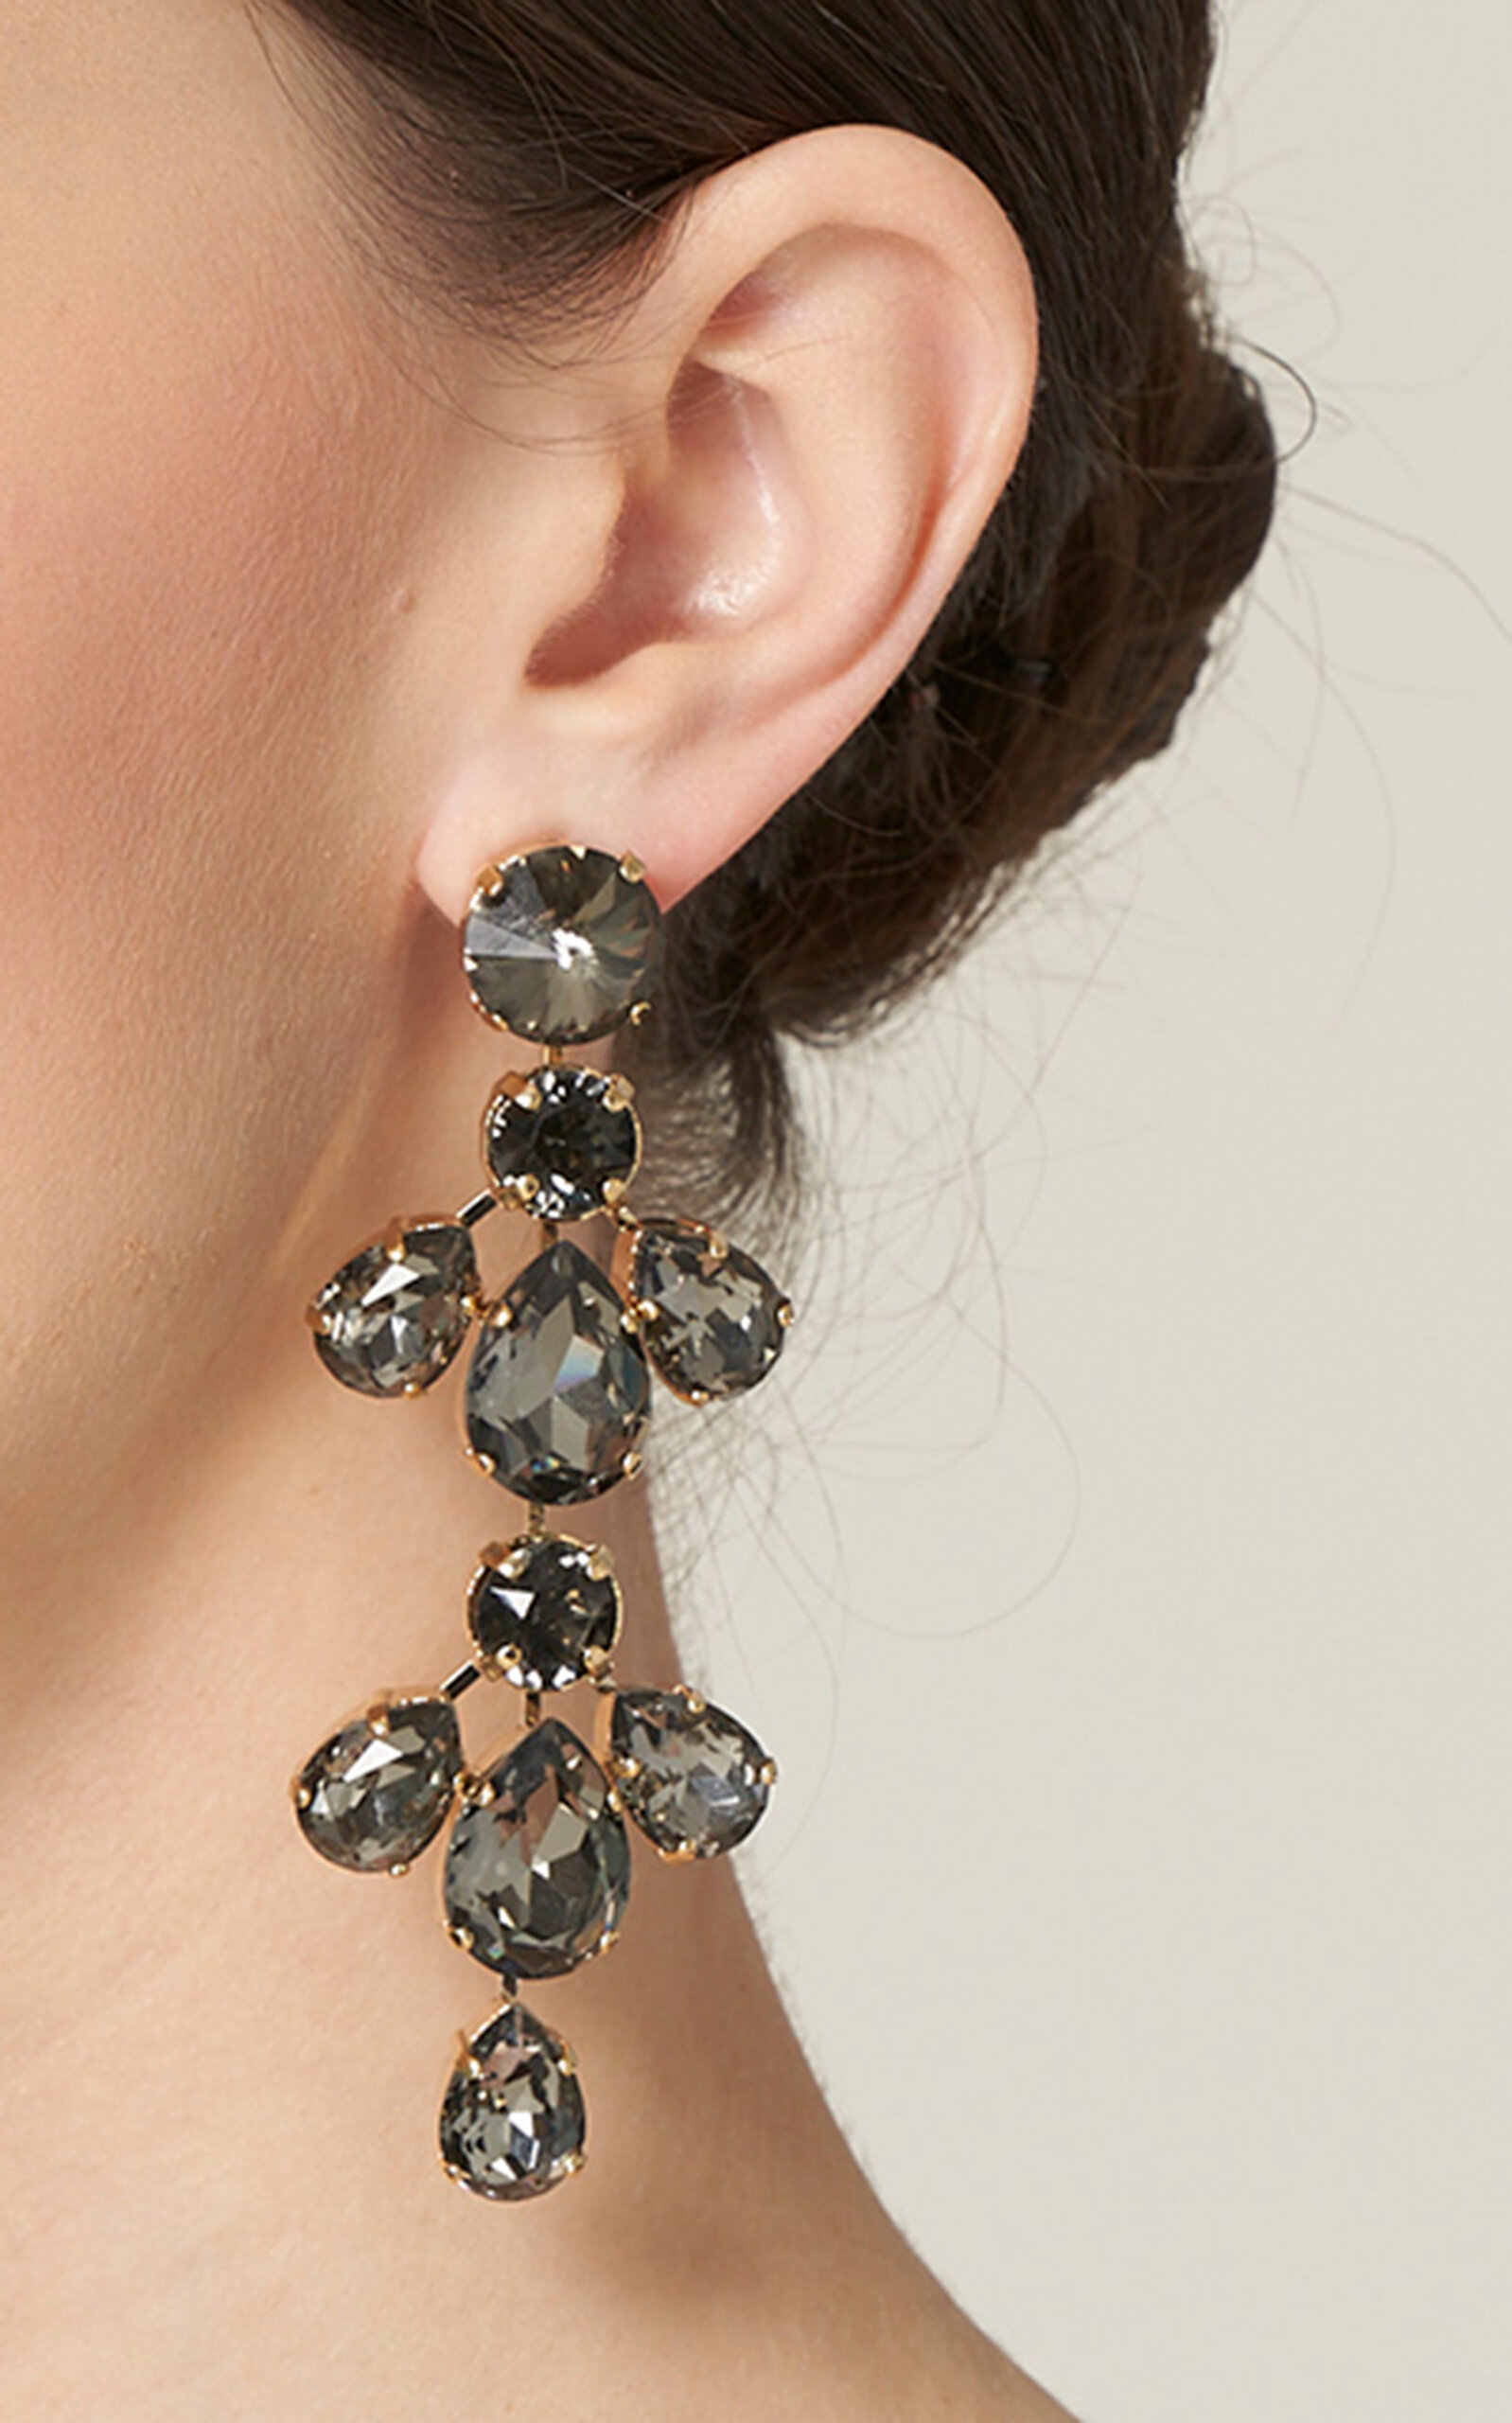 Carolina Herrera - Women's Riviere Crystal Drop Earrings - Green - OS - Only At Moda Operandi - Gifts For Her